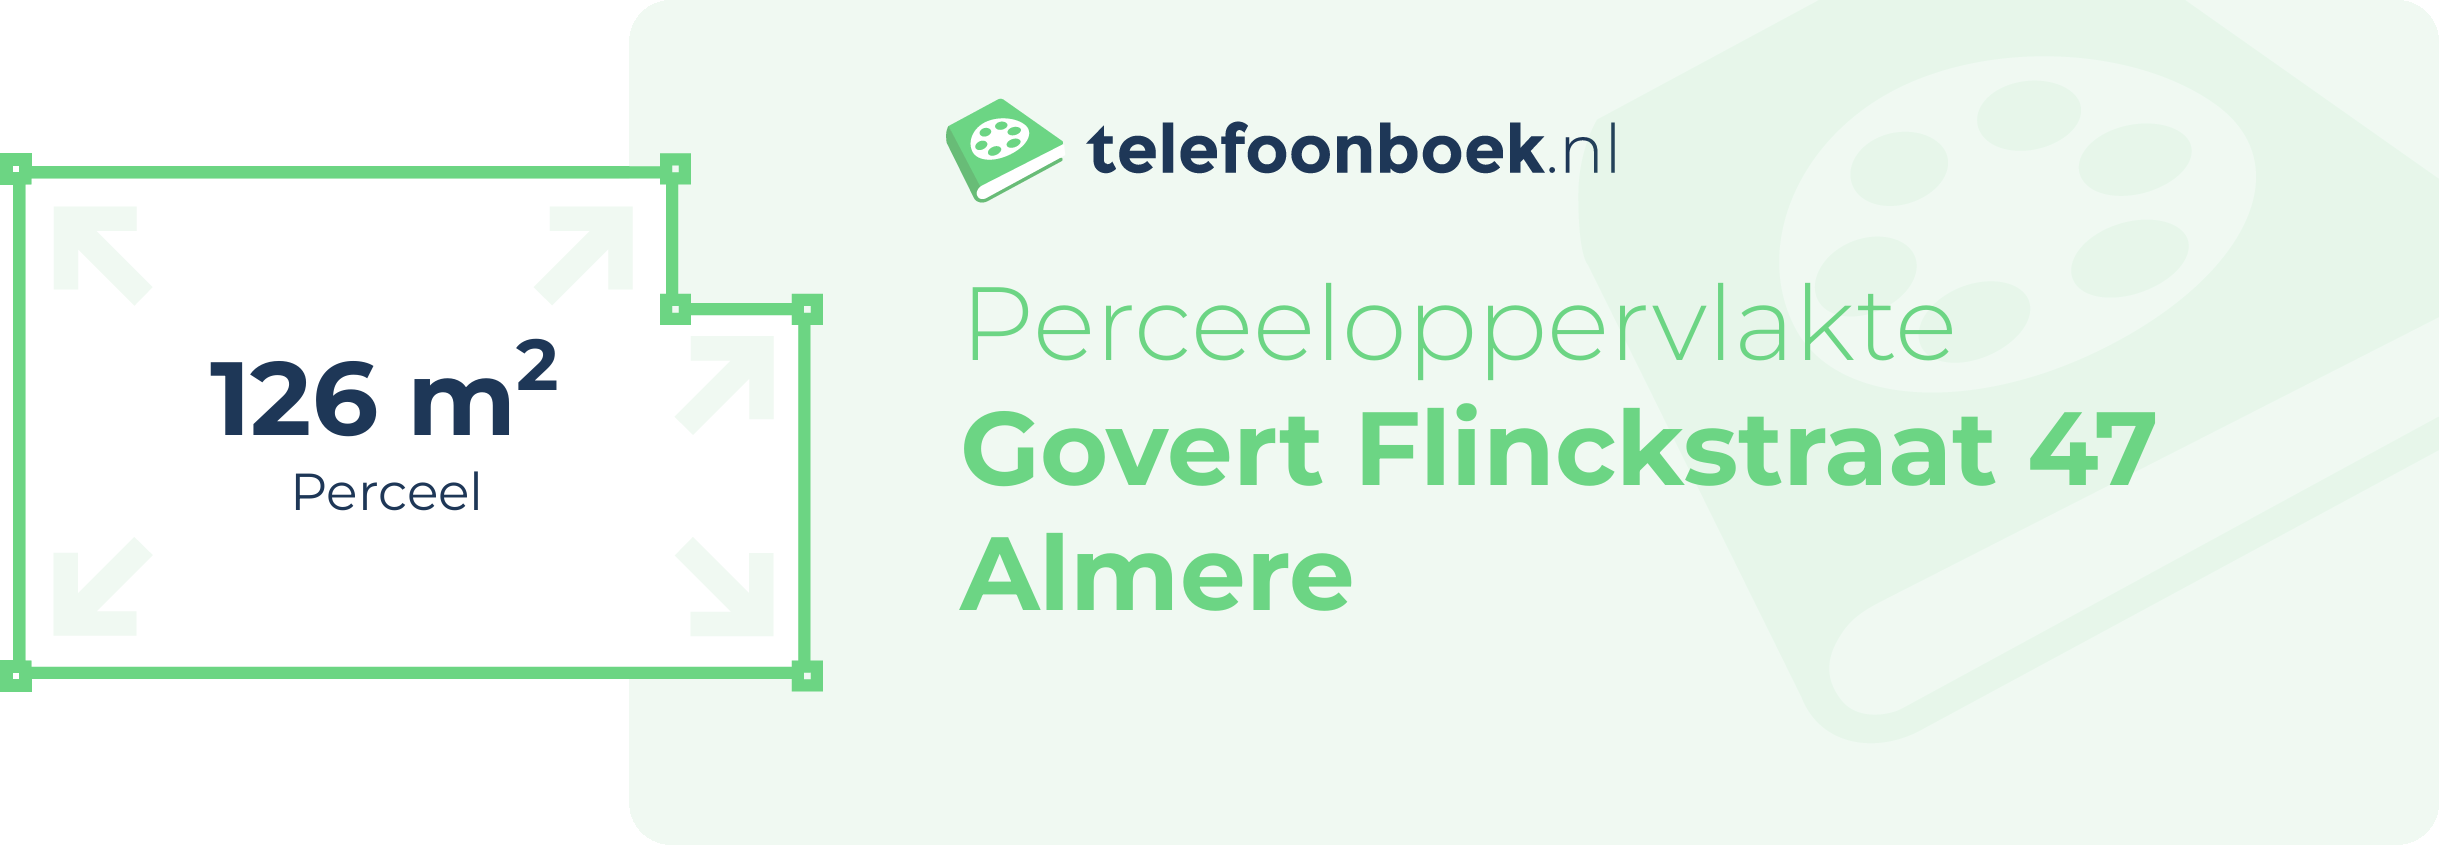 Perceeloppervlakte Govert Flinckstraat 47 Almere